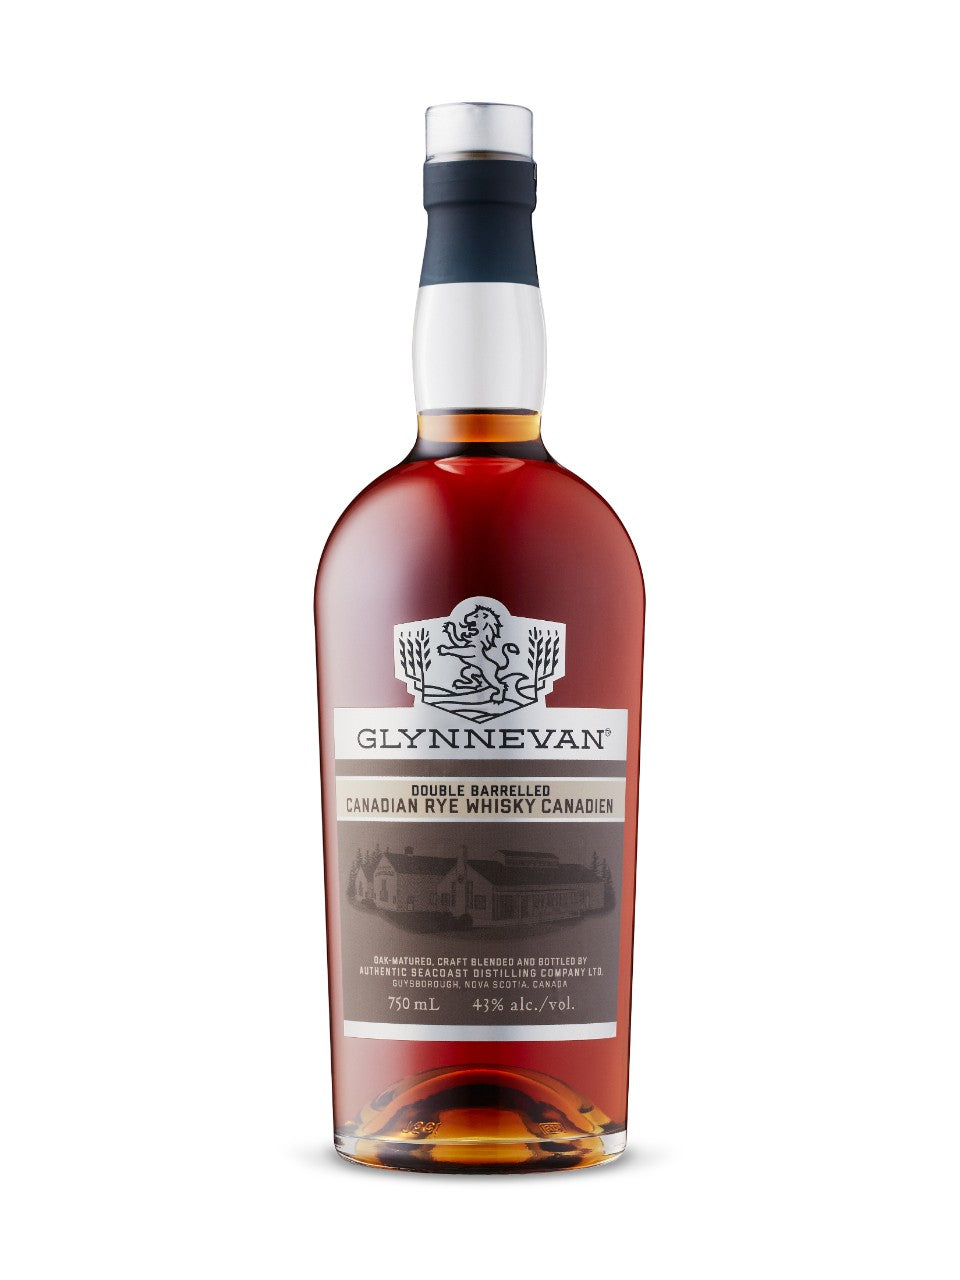 Glynnevan Double Barrelled Canadian Rye Whisky 750 mL bottle